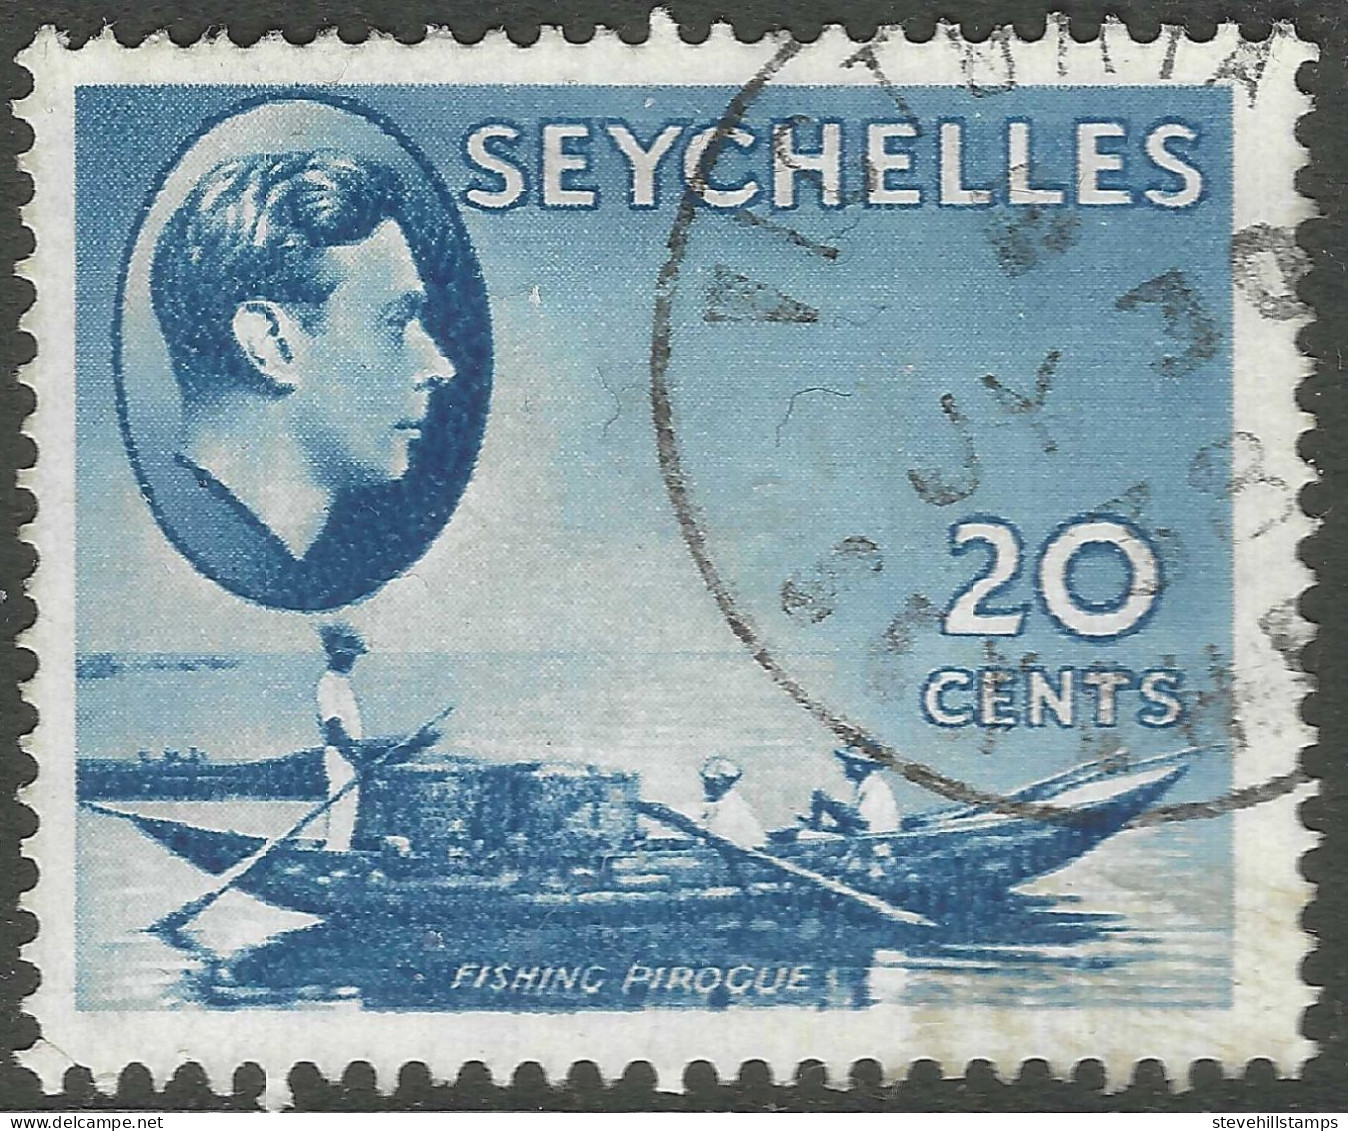 Seychelles. 1938-49 KGVI. 20c Blue Used. SG 140. M3172 - Seychelles (...-1976)